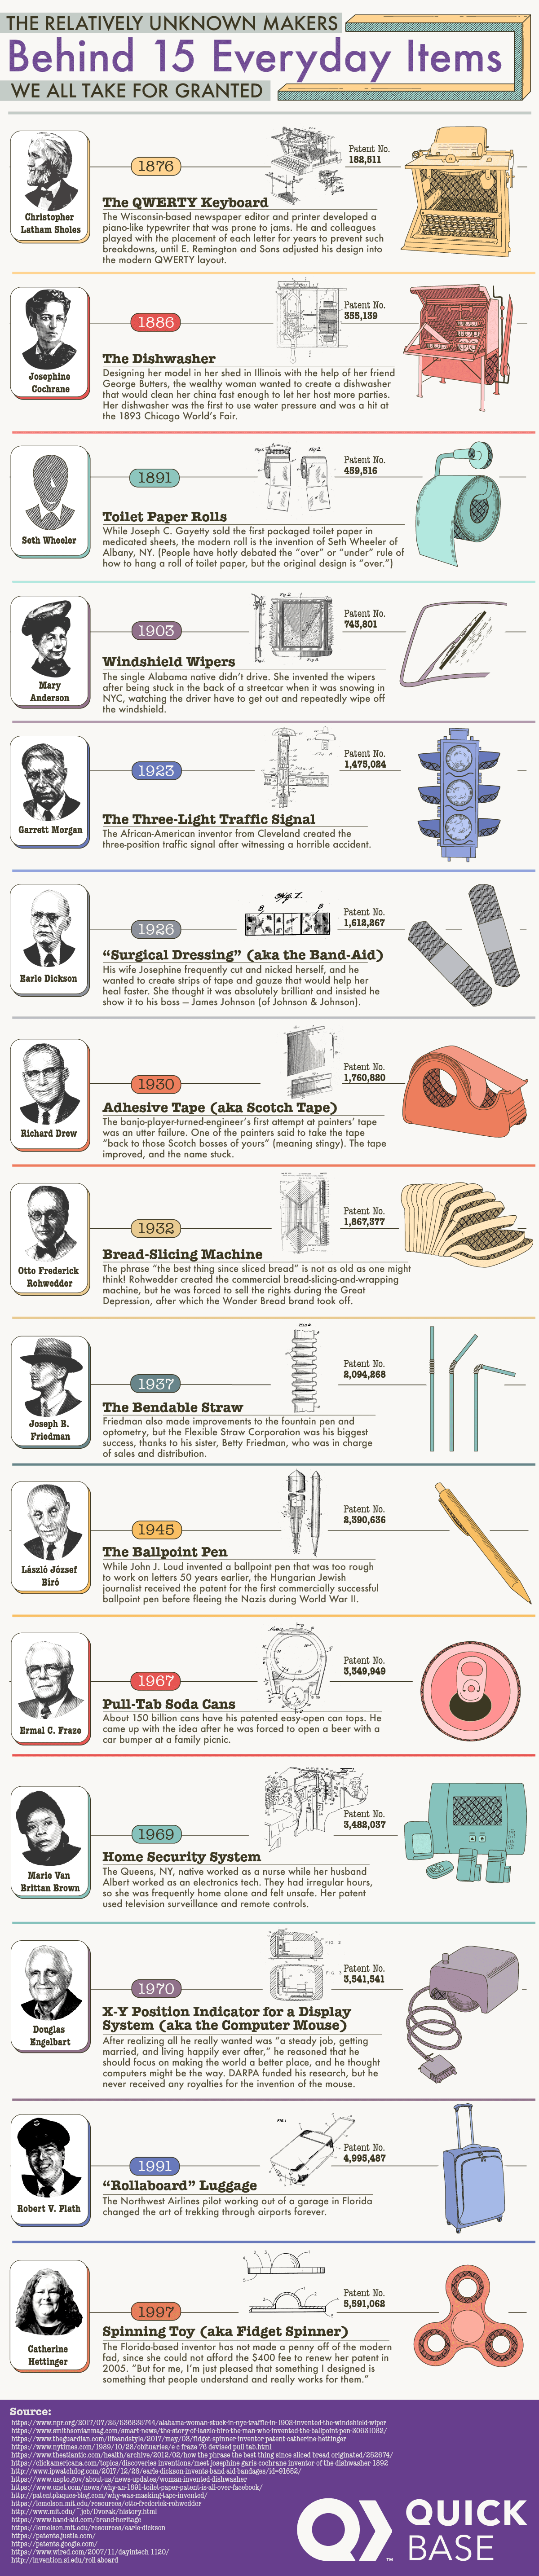 Unknown Inventors Behind 15 Everyday Items